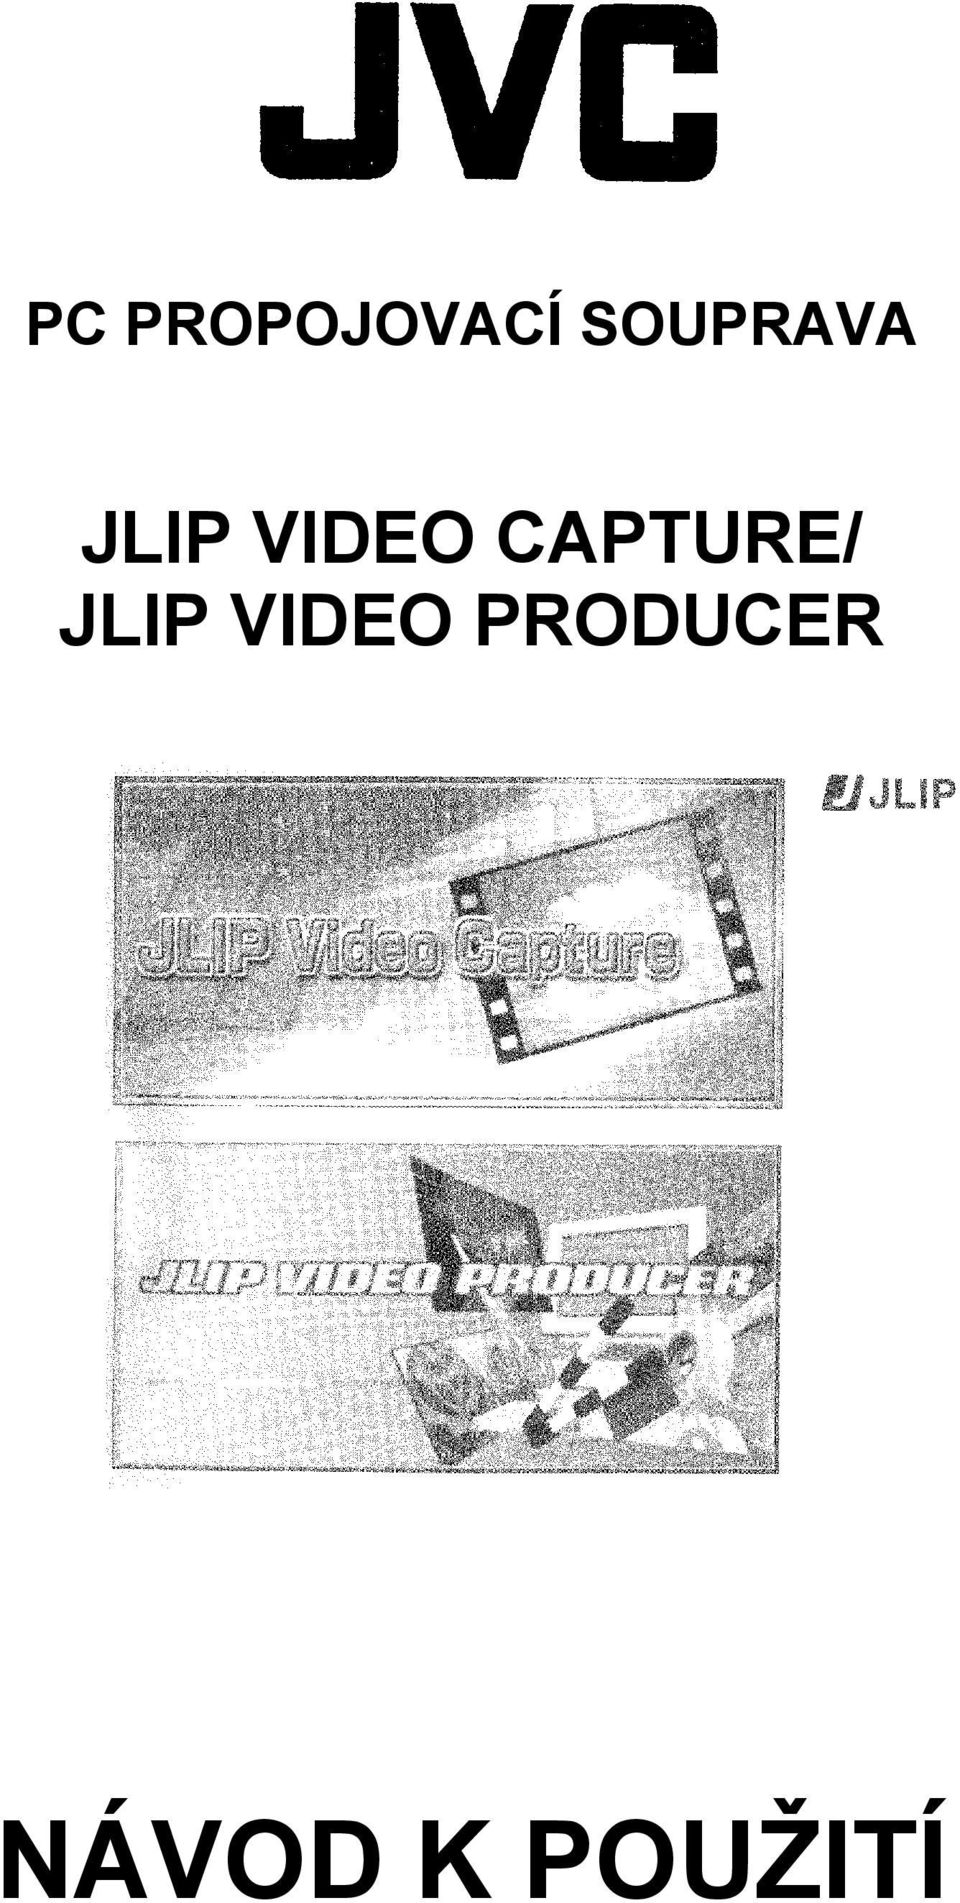 CAPTURE/ JLIP VIDEO